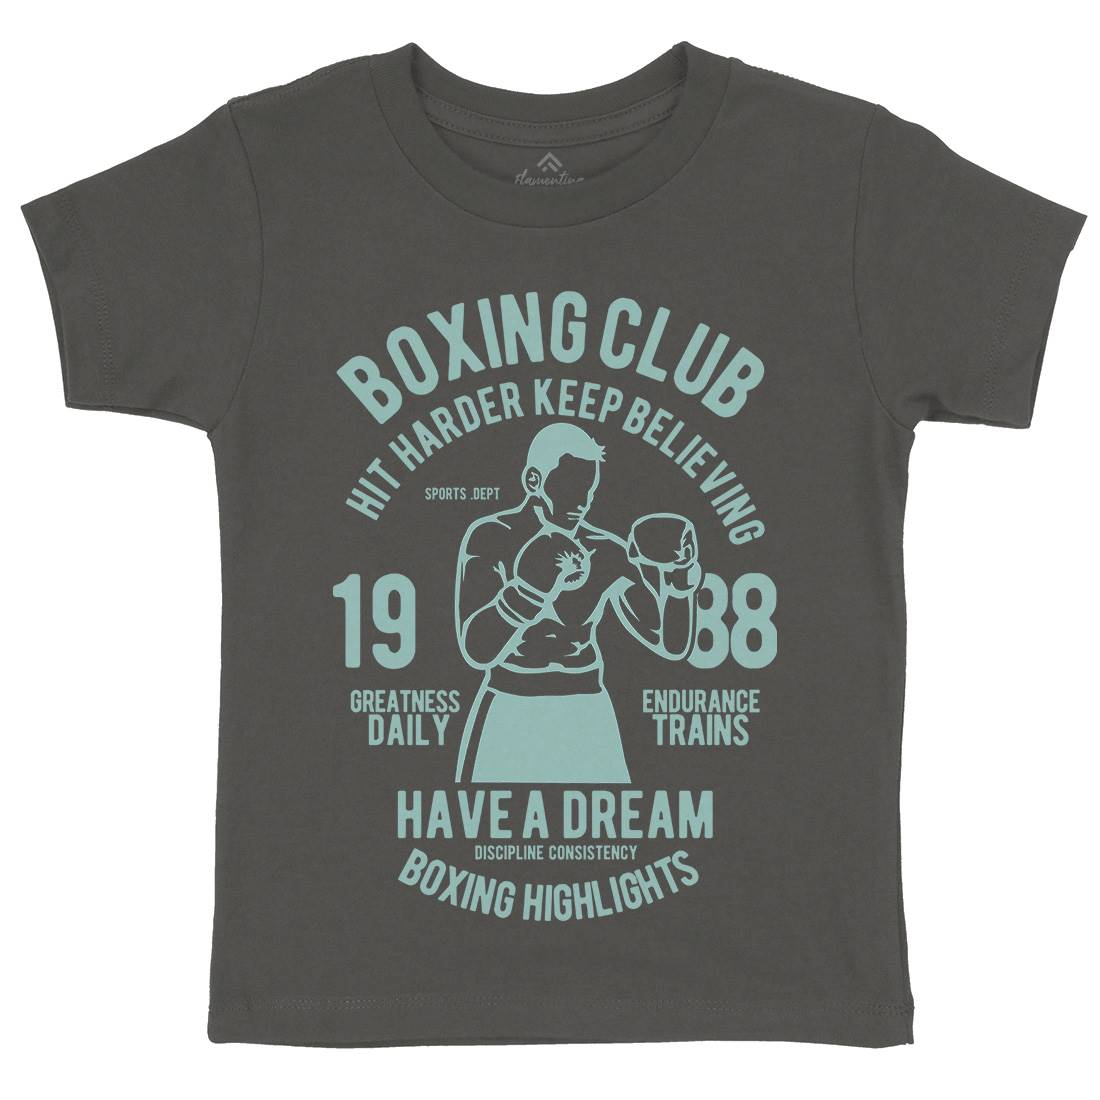 Boxing Club Kids Crew Neck T-Shirt Sport B186